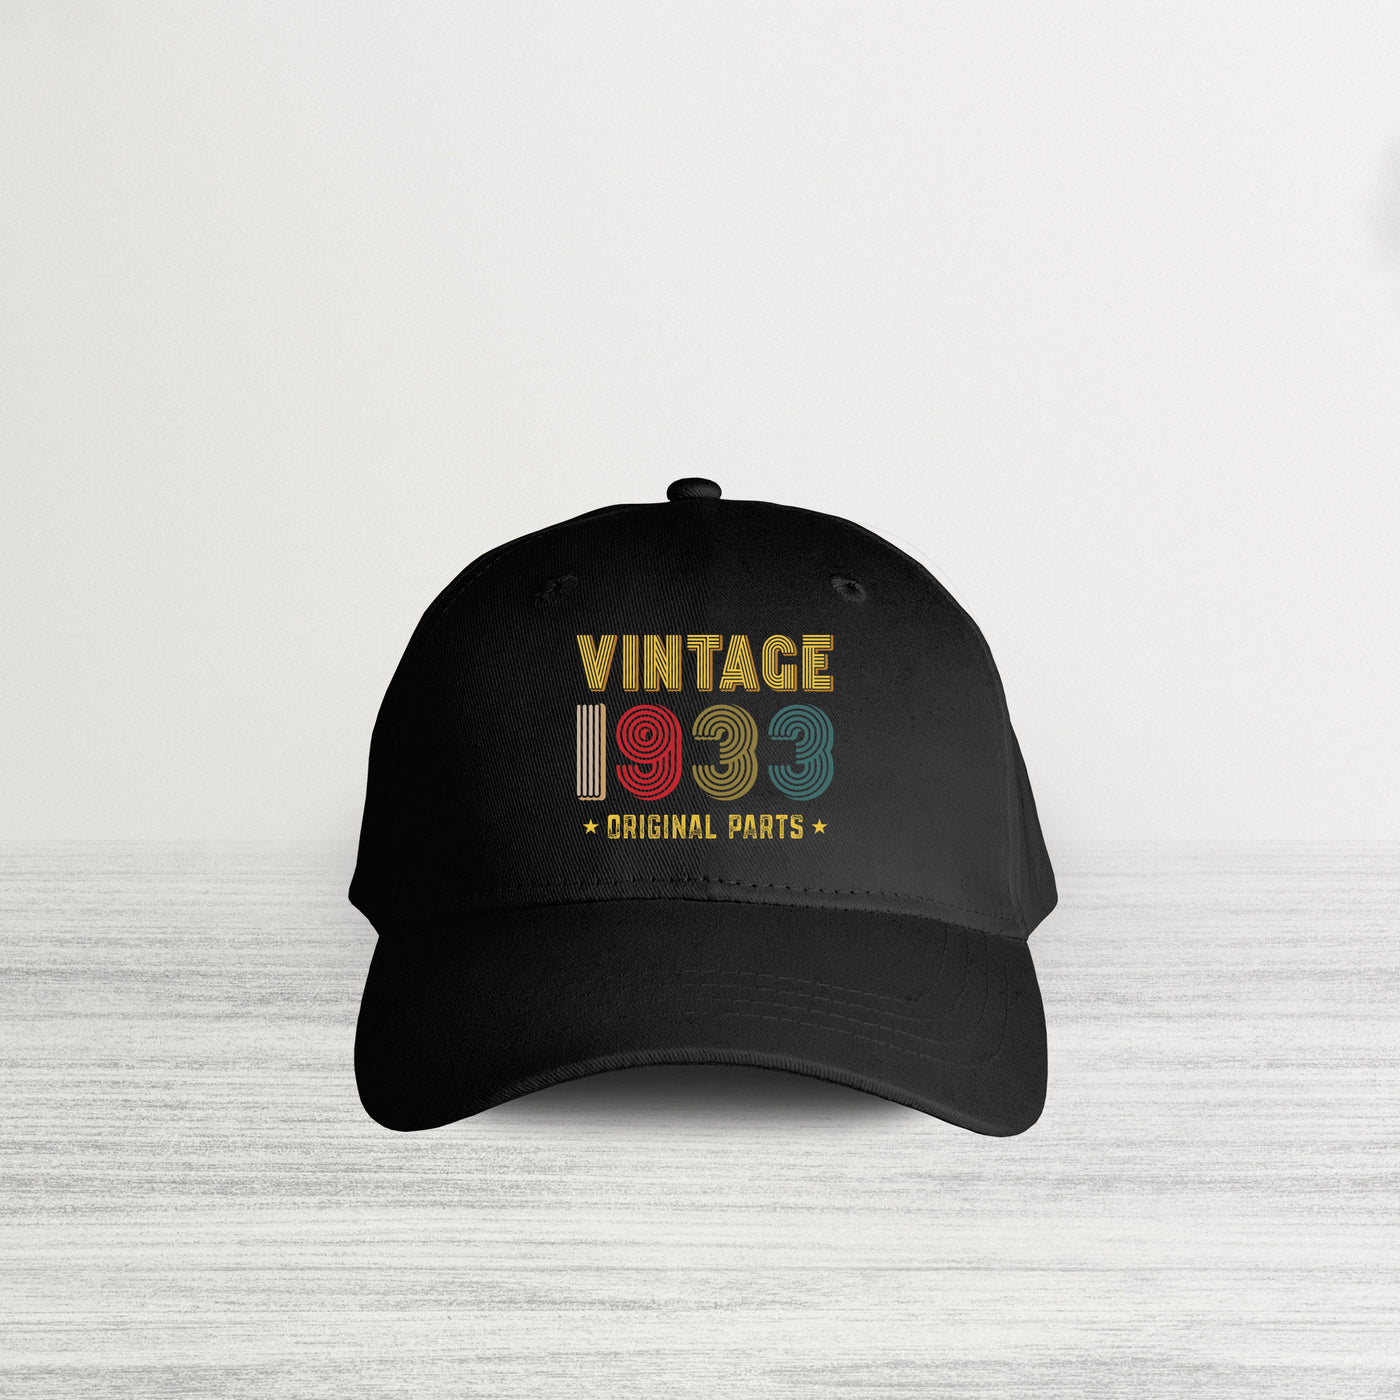 VINTAGE 1933 C HAT